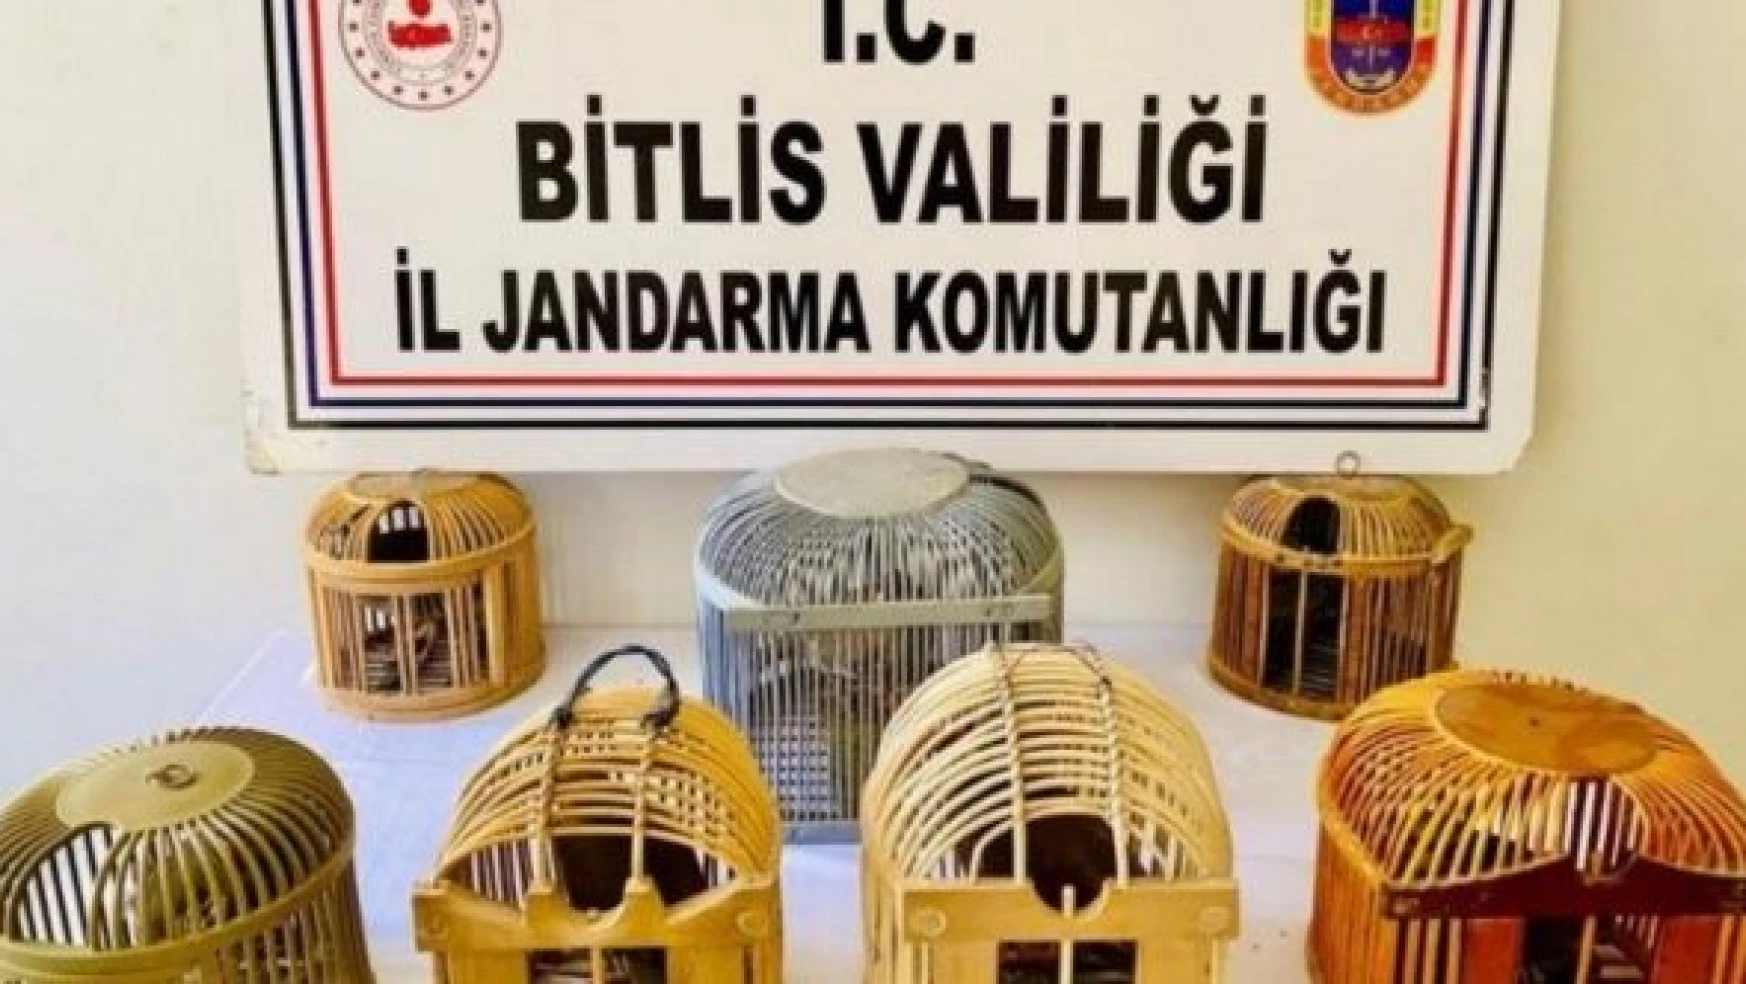 Bitlis'te kaçak keklik avcılığına rekor ceza!